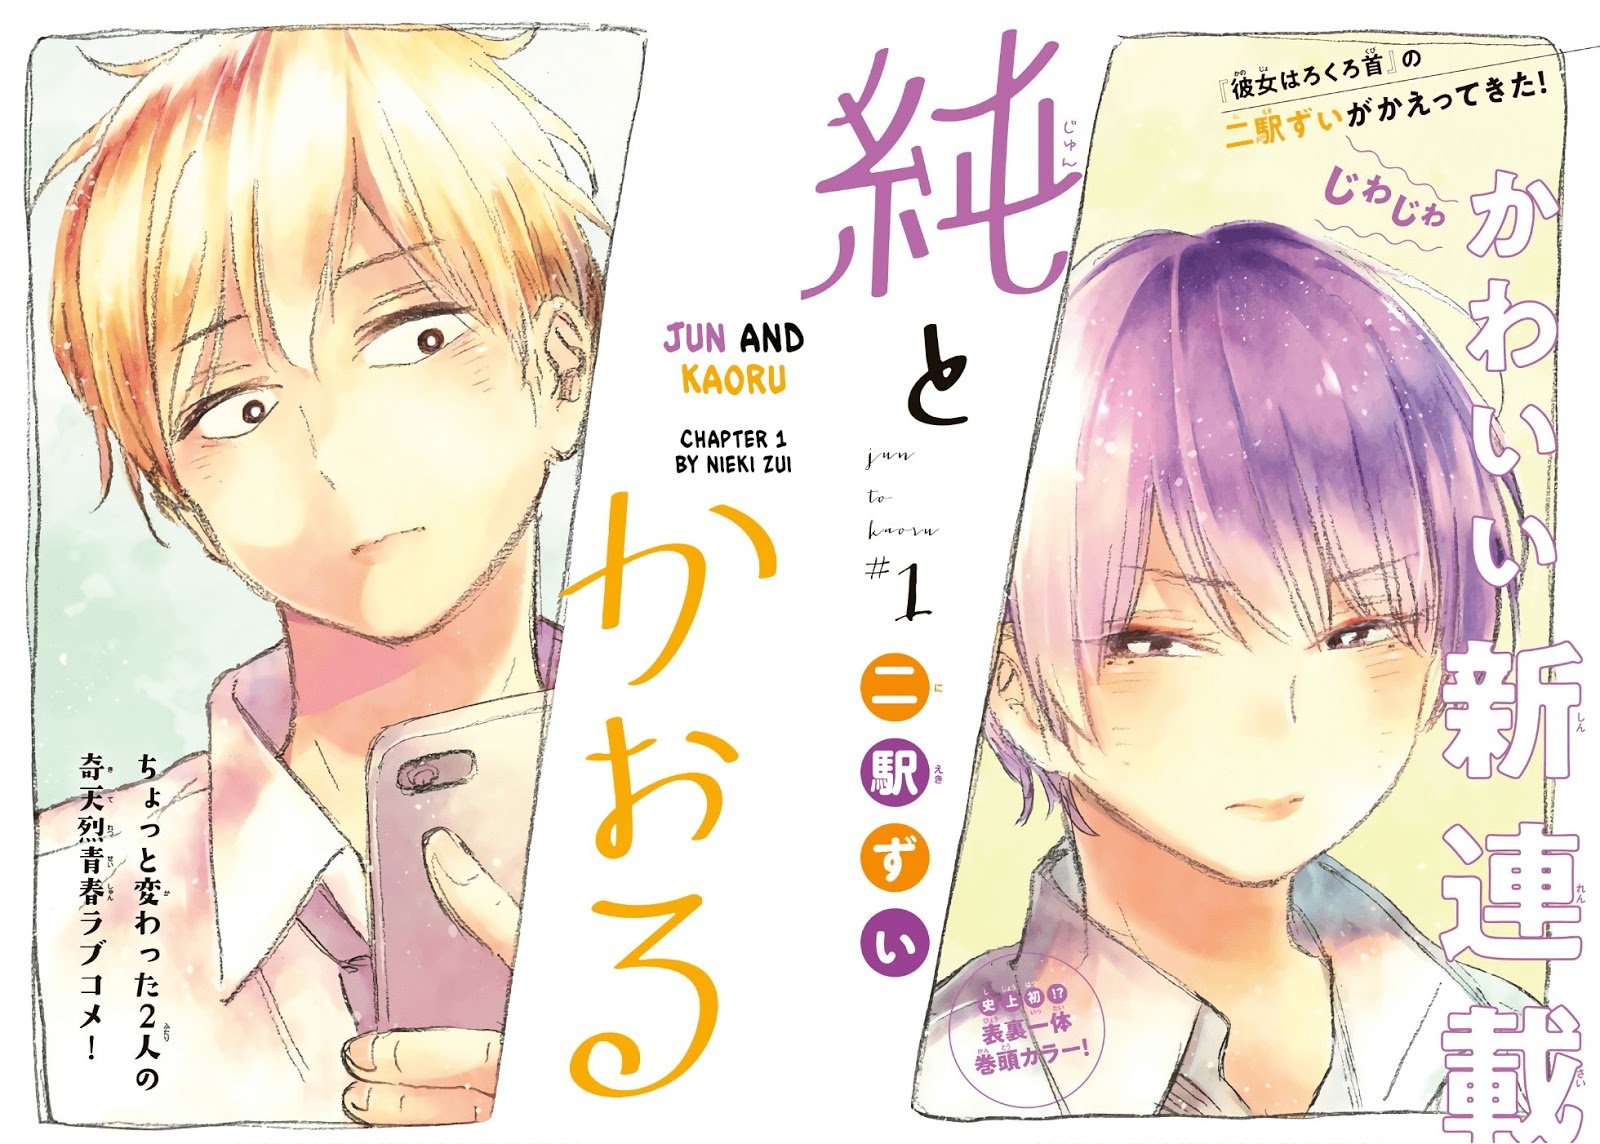 Jun and Kaoru: Pure and Fragrant Chapter 01